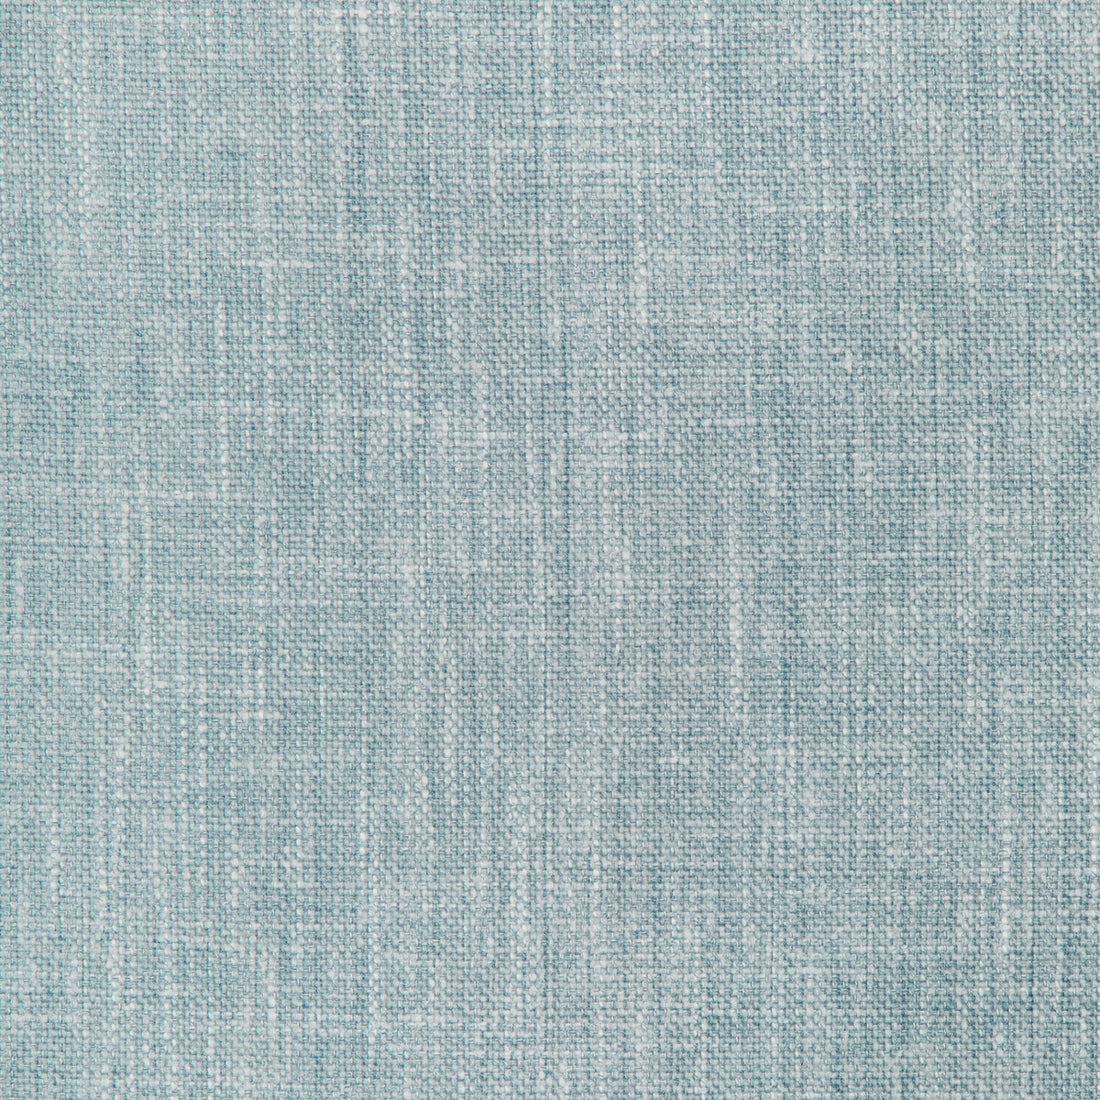 Kravet Smart fabric in 37065-15 color - pattern 37065.15.0 - by Kravet Smart